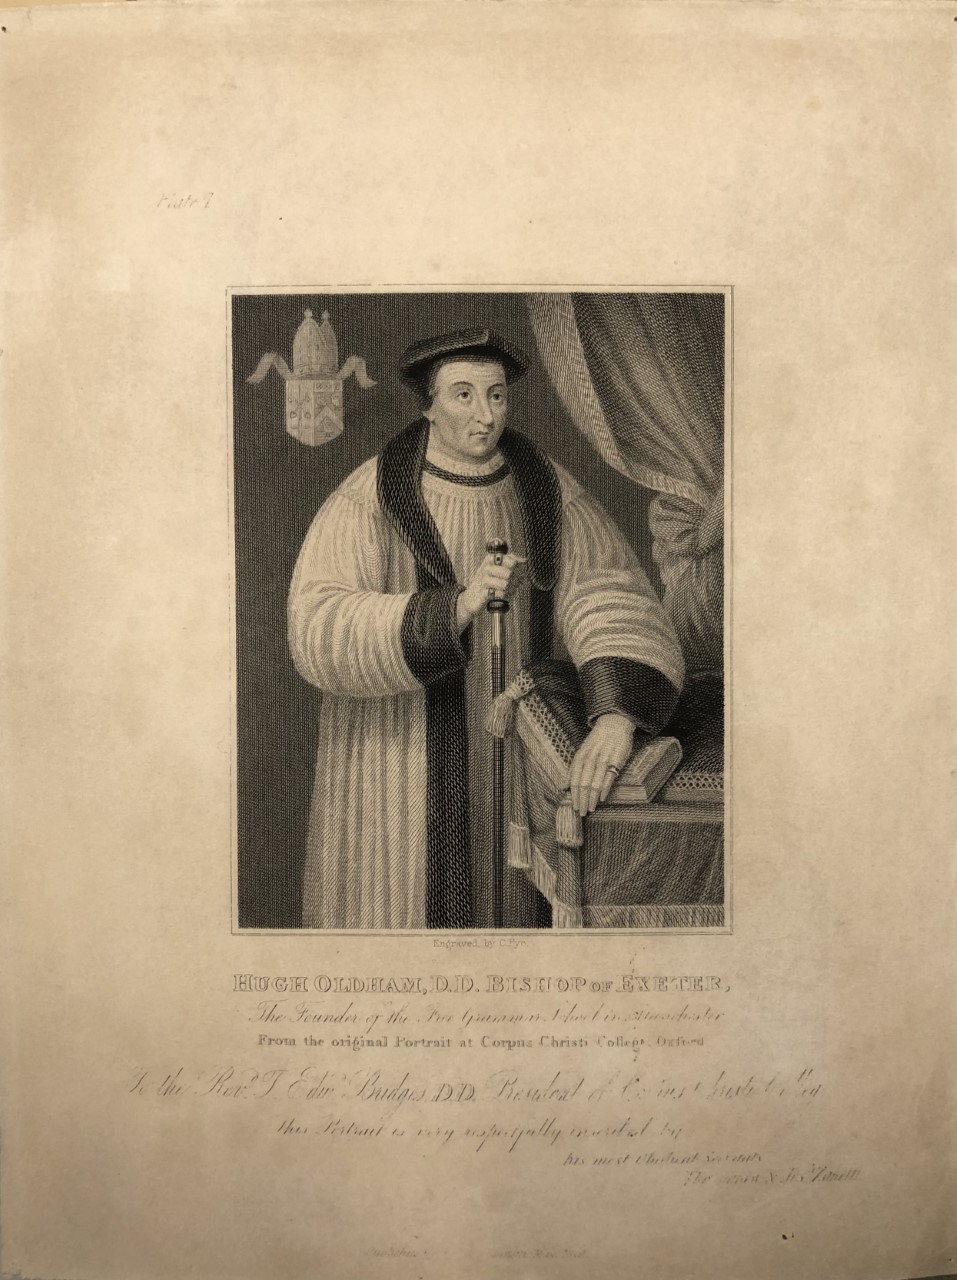 Hugh Oldham, Bishop of Exeter